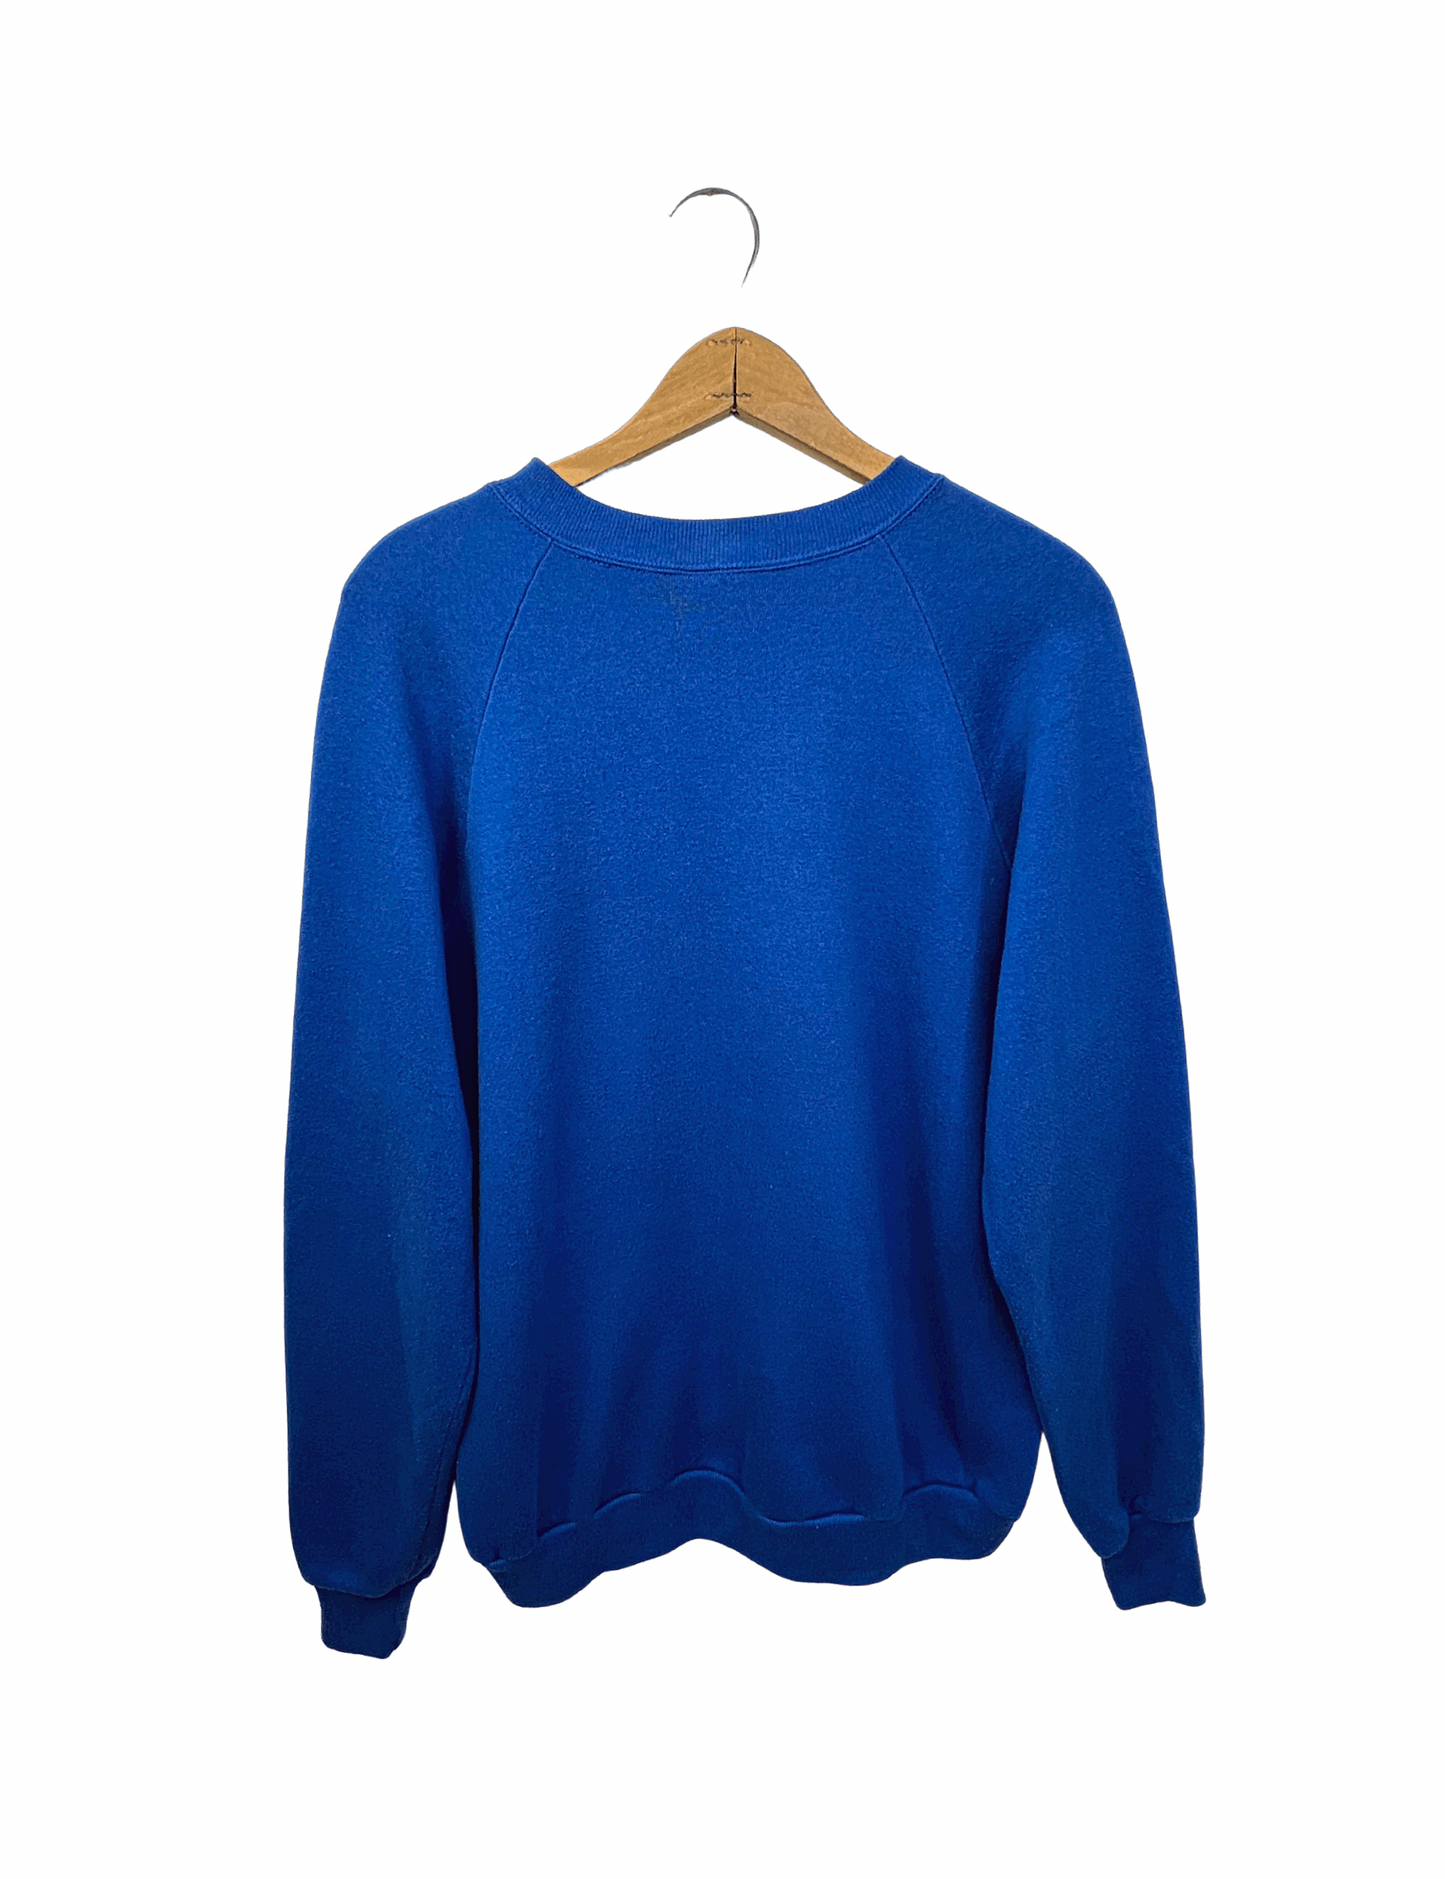 80’s Jerzees Super Soft Cobalt Blue Basic Crew Sweatshirt Size 2X